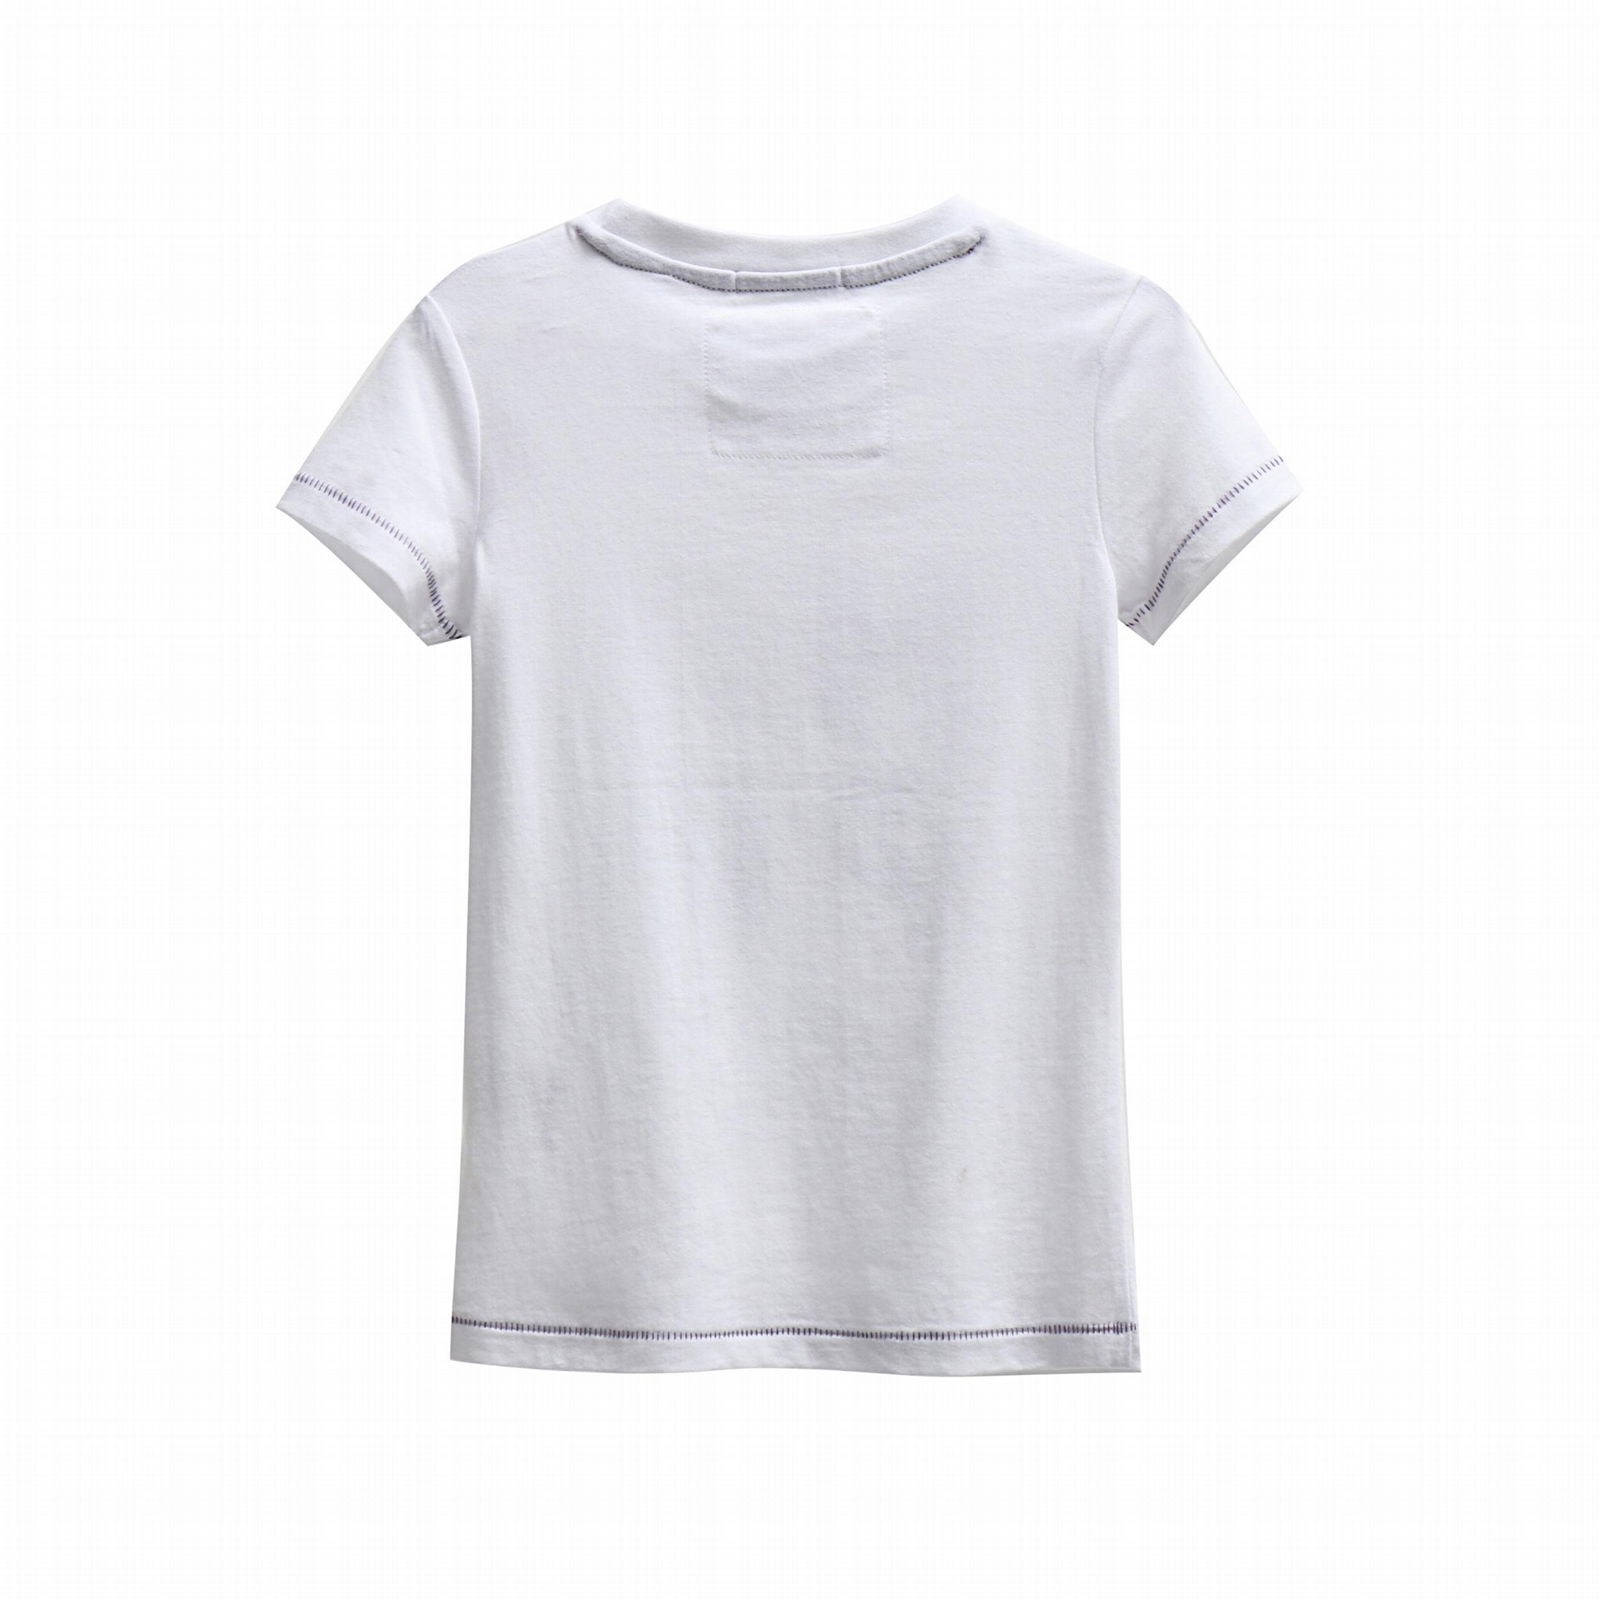 Girl's cotton t-shirt 2